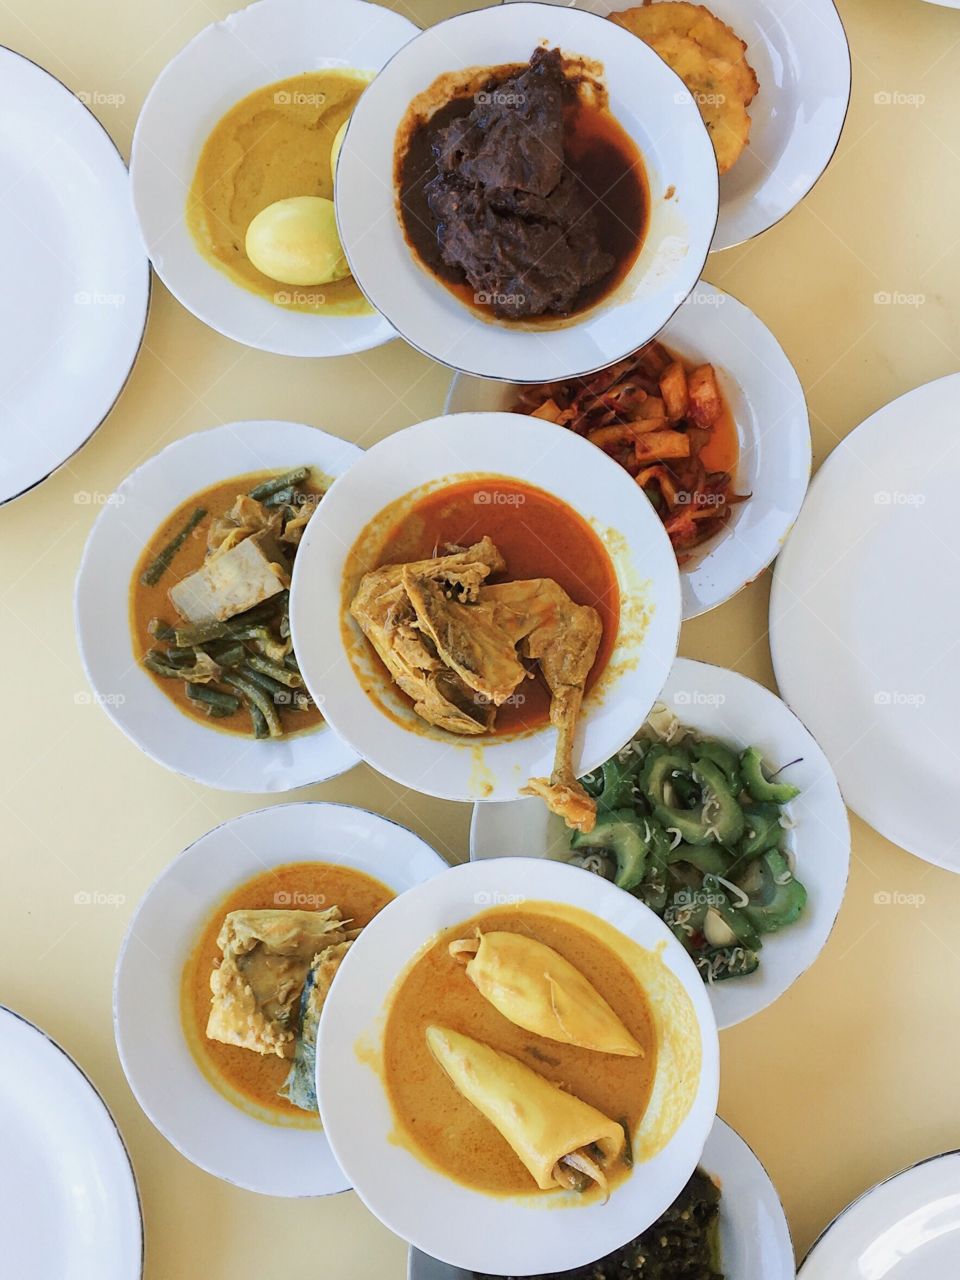 Best food in the world "Nasi Padang"